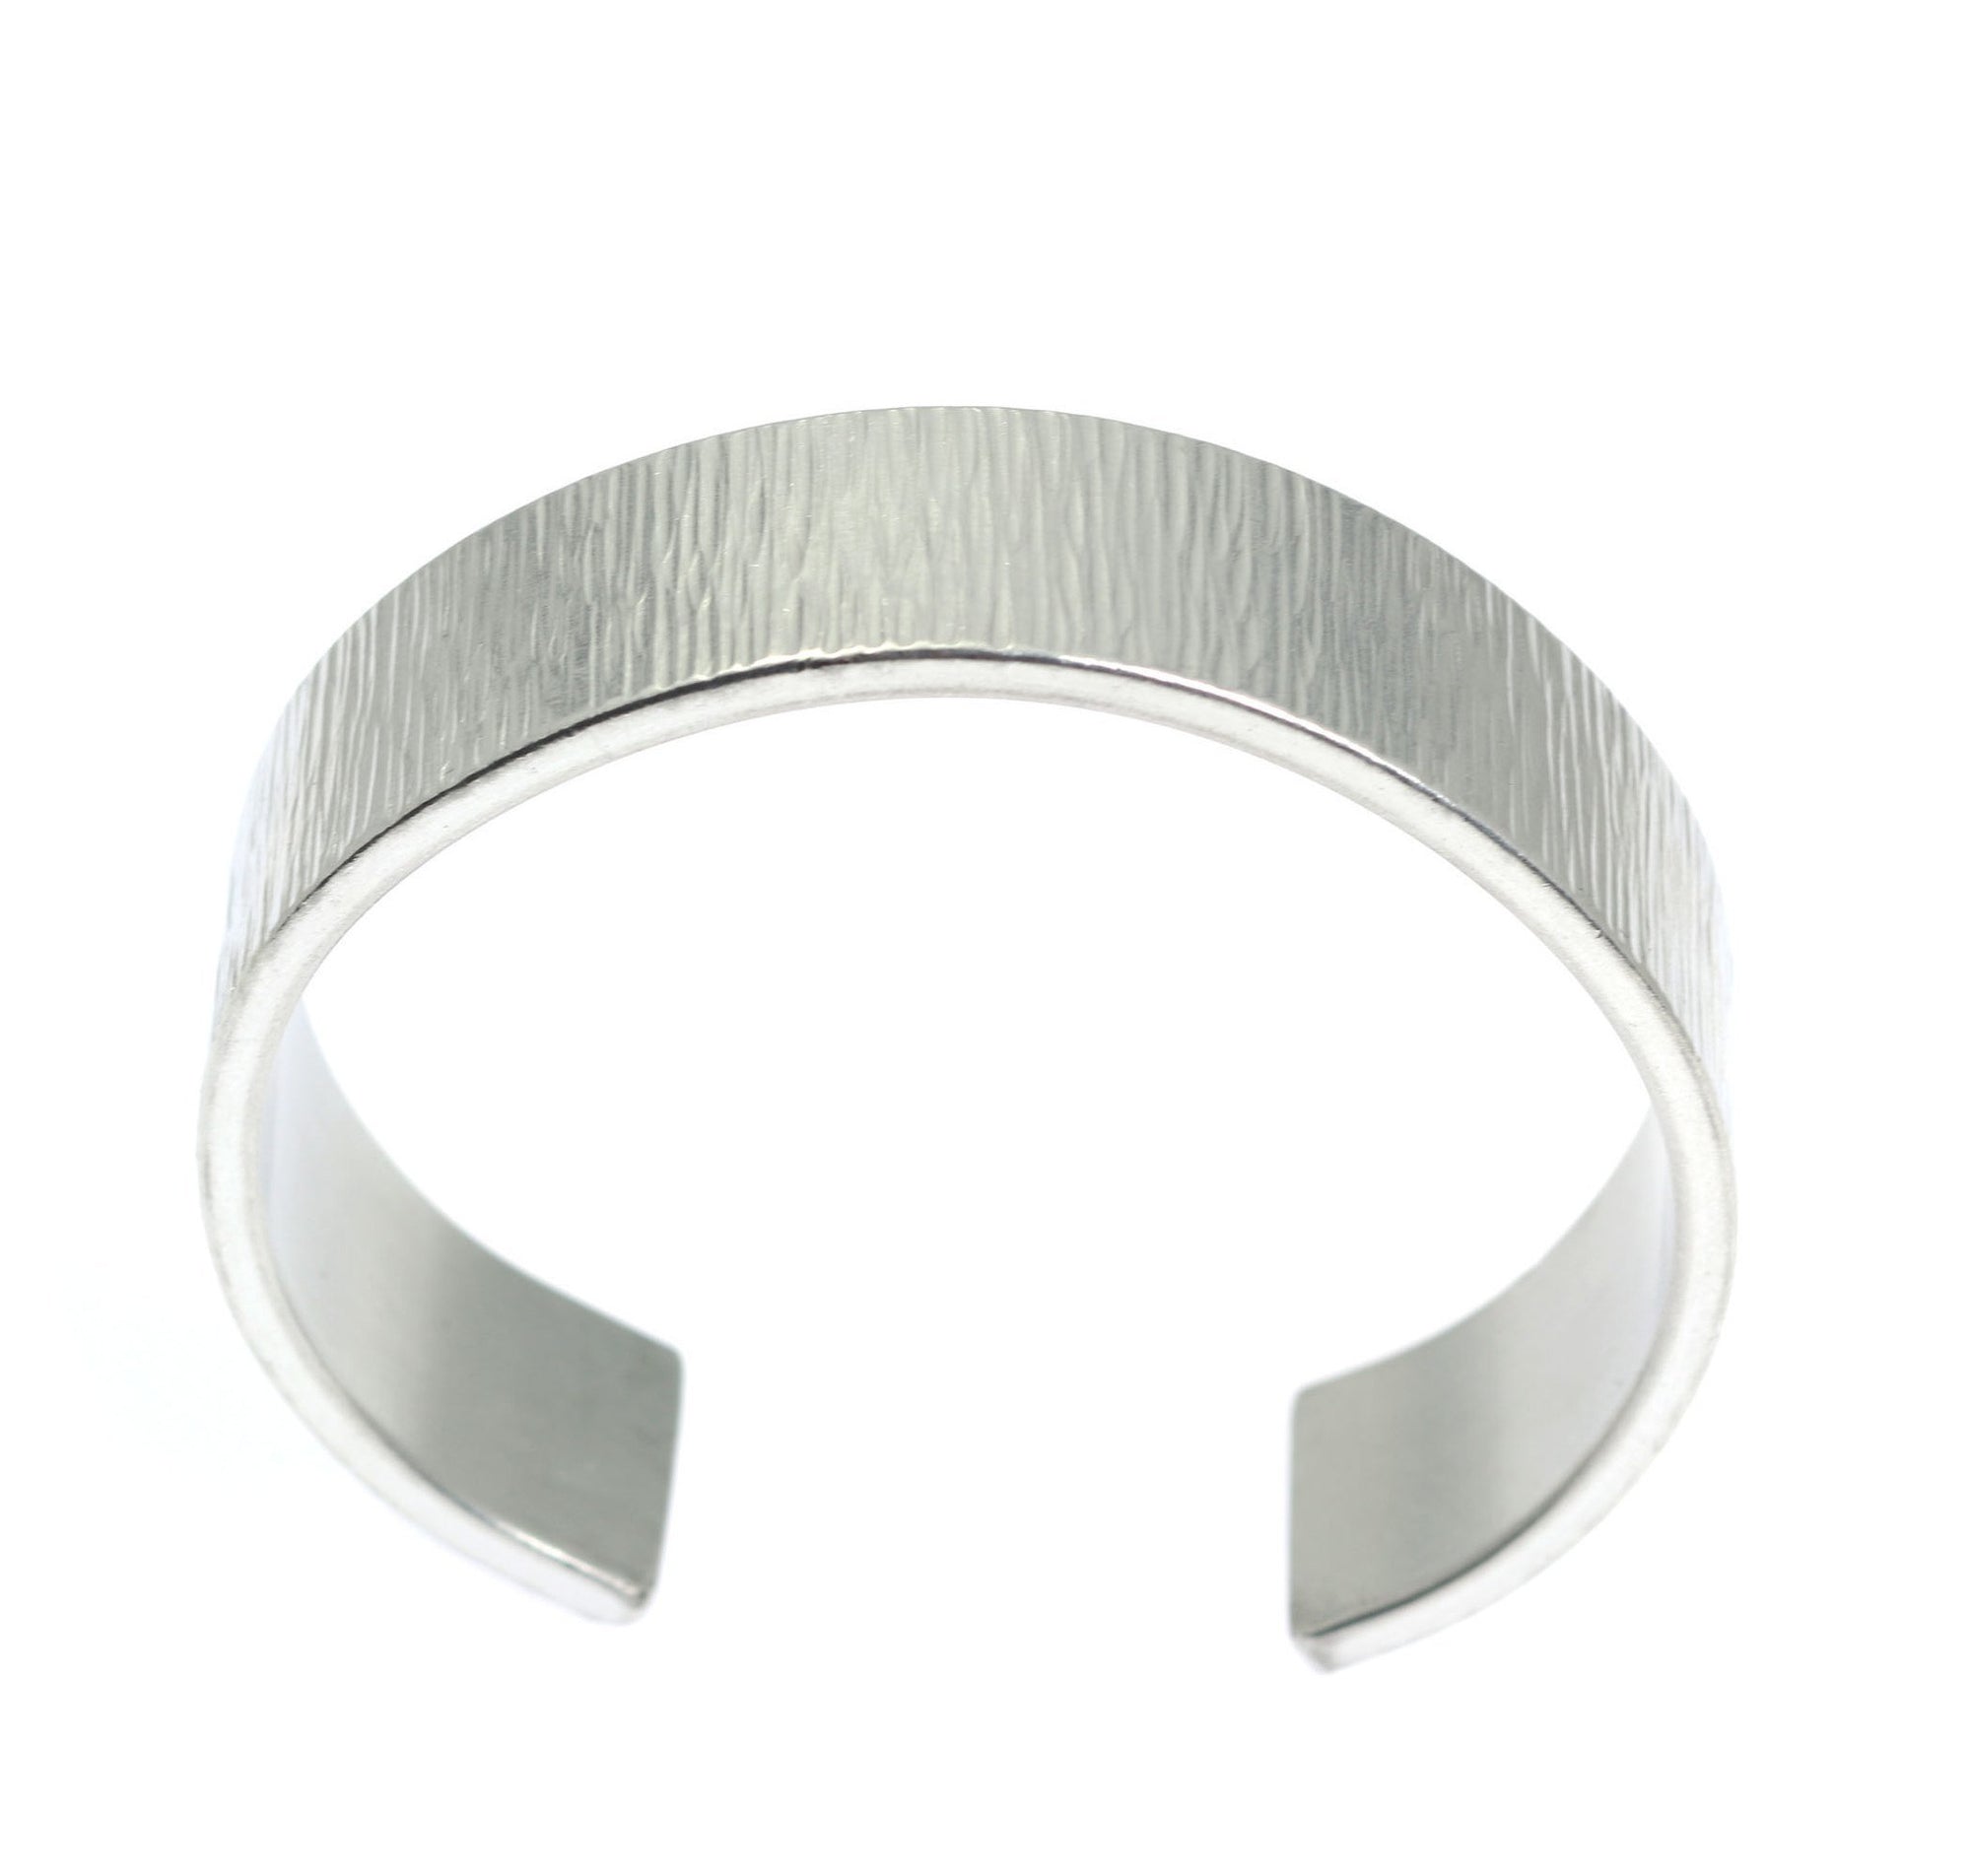 Opening of Chased Aluminum Cuff Bracelet